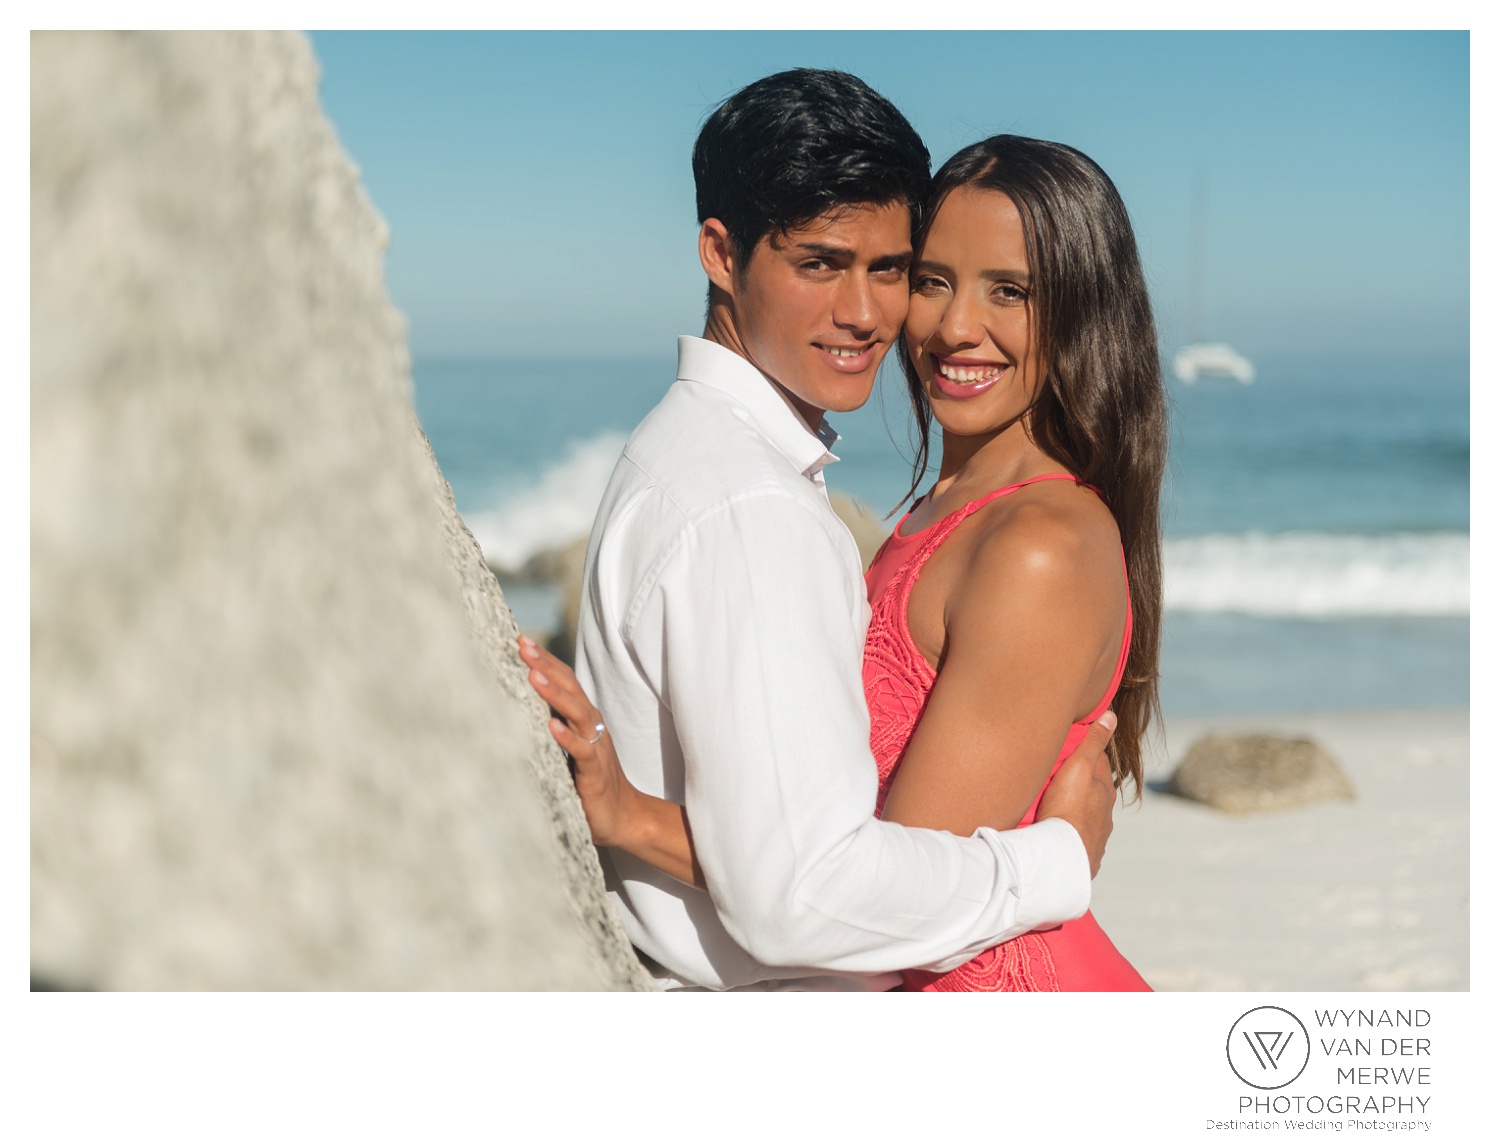 WvdM_engagementshoot_engaged_couple_prewedding_llandudno_cliftonbeach_beach_formal_southafrica_weddingphotographer_greernicolas-103.jpg